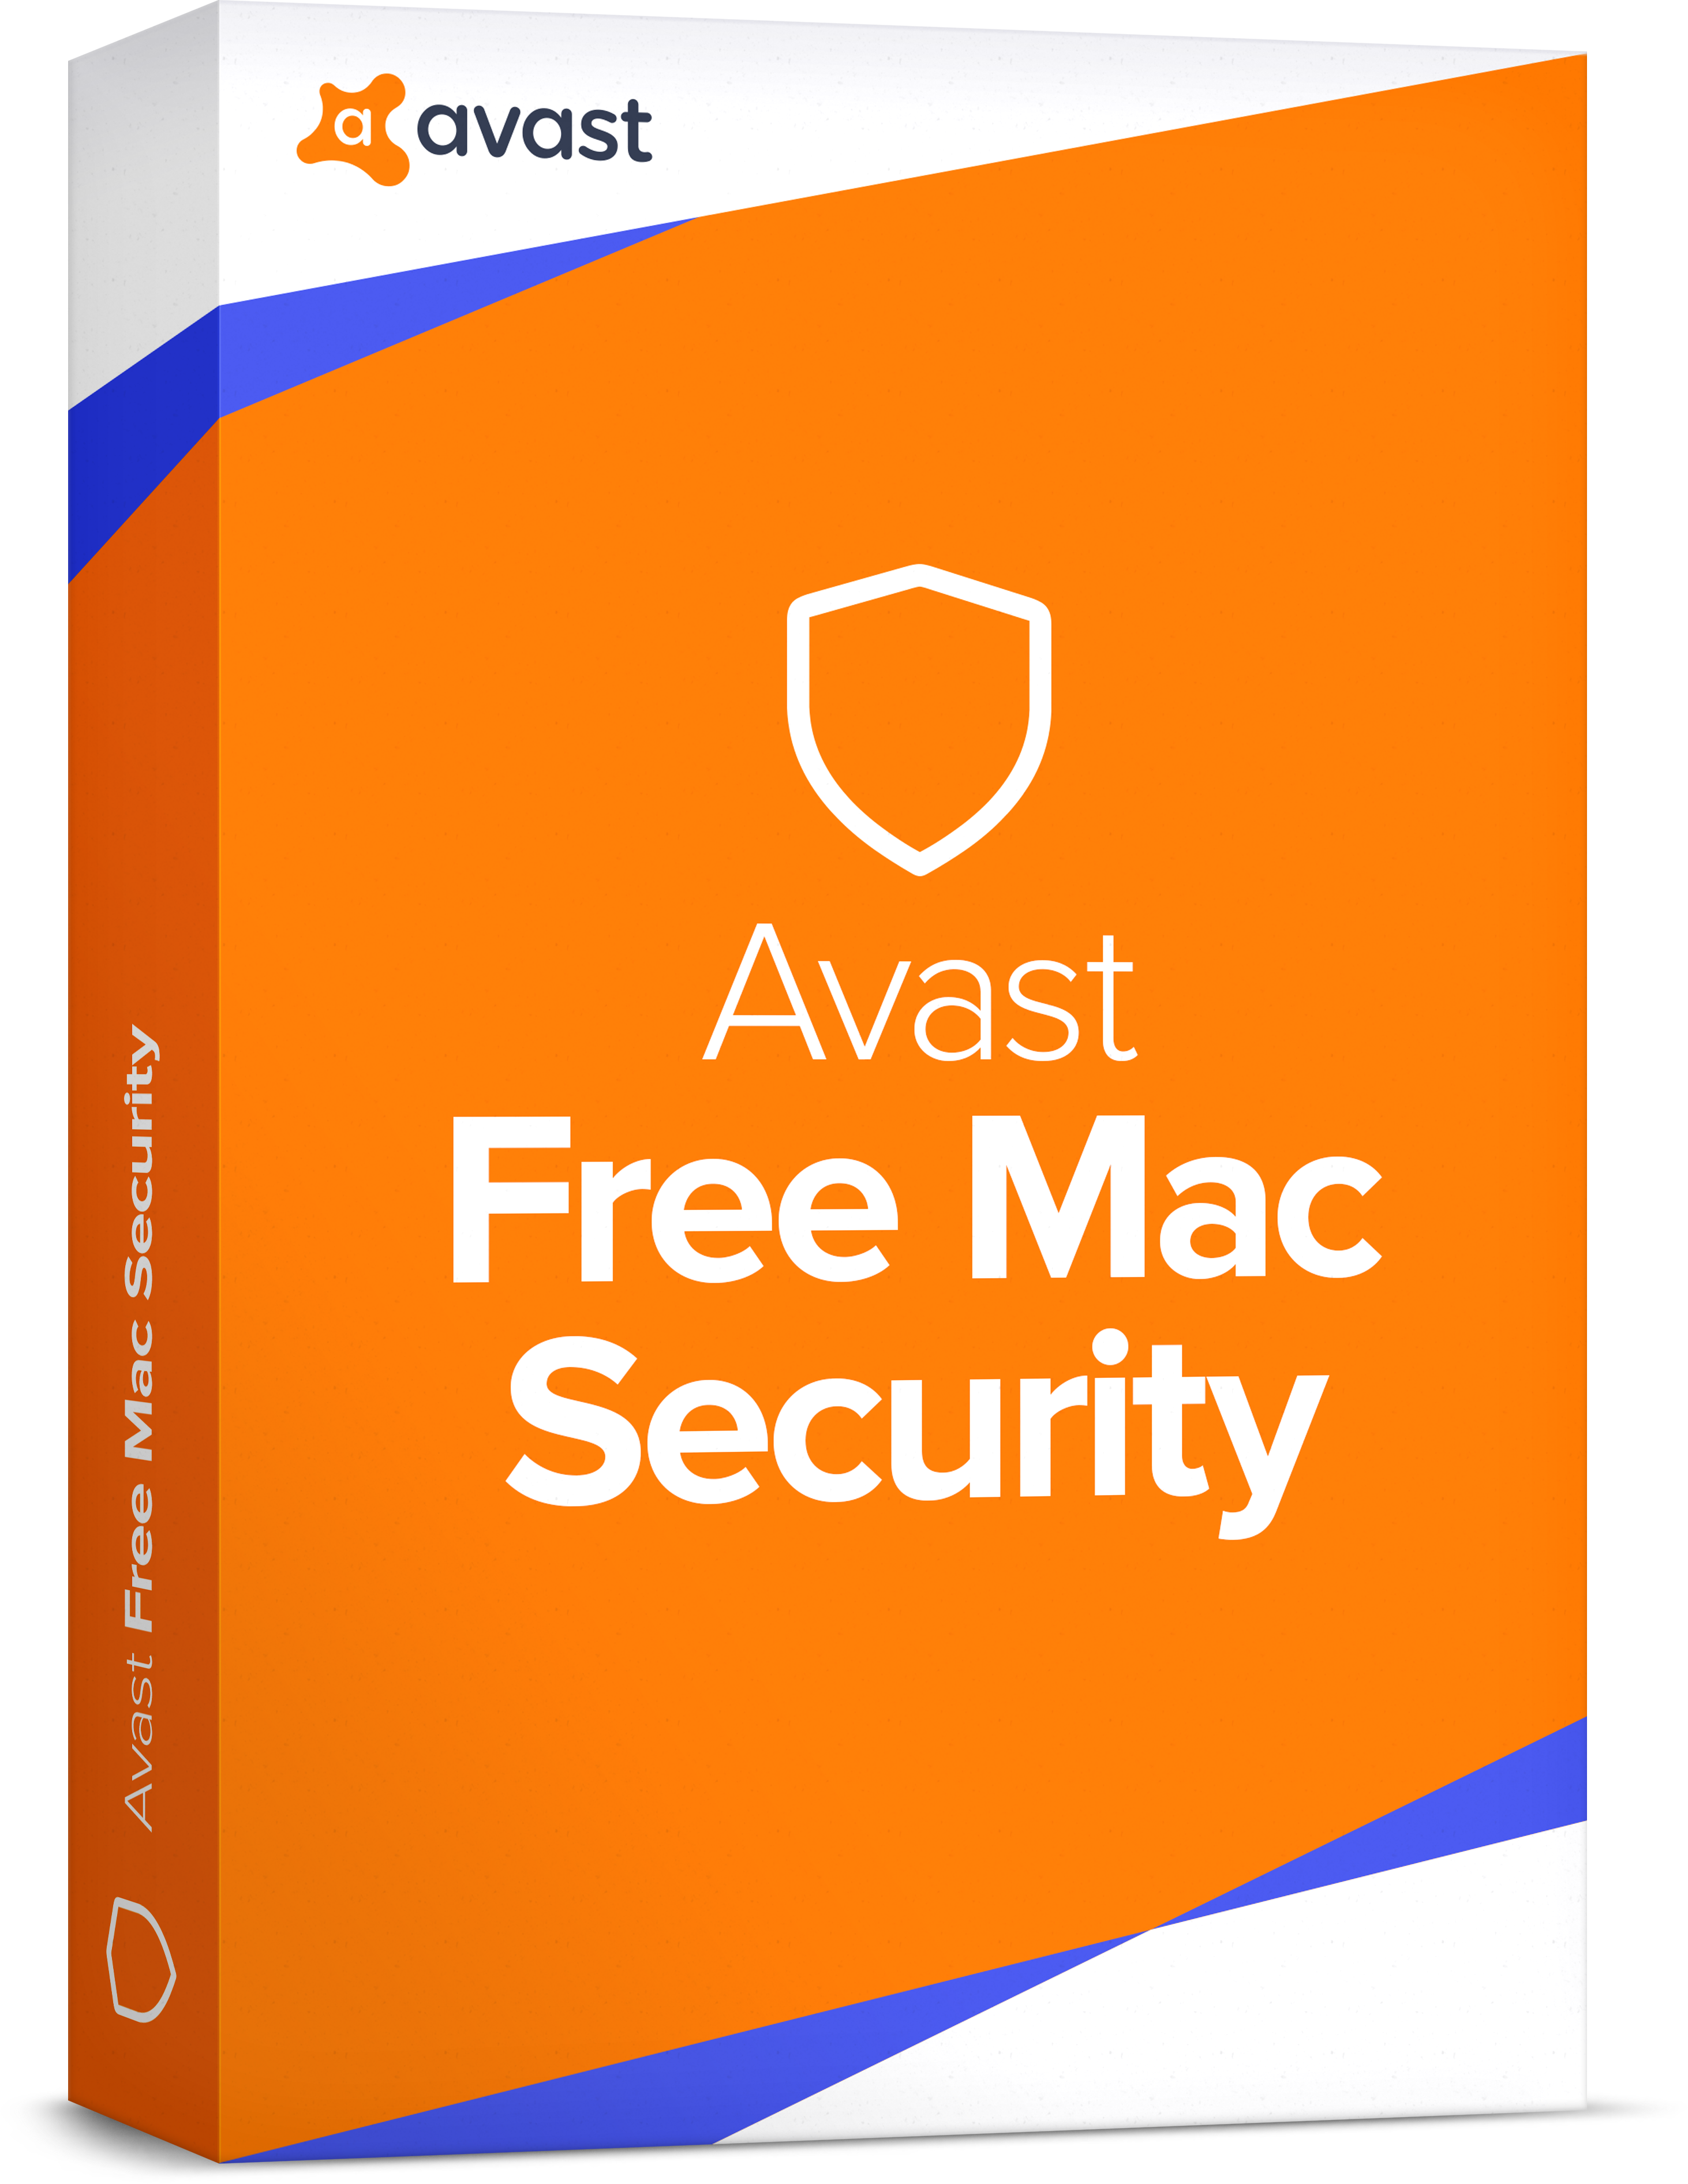 Avast Free Antivirus icon